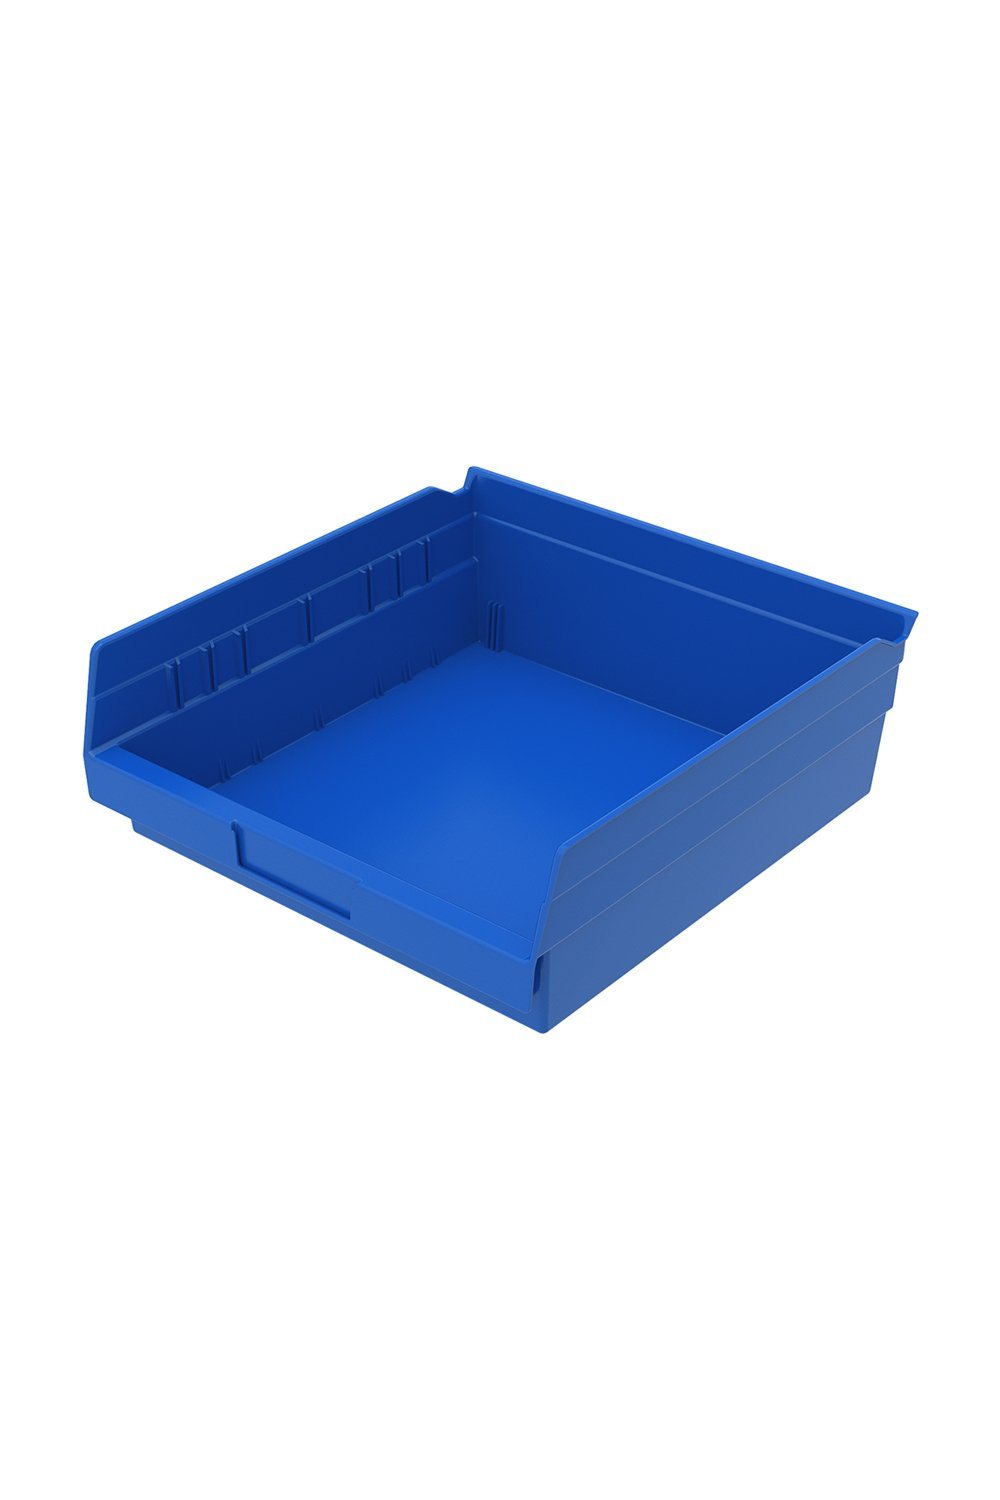 Shelf Bin for 12"D Shelves Bins & Containers Acart 11-5/8'' x 11-1/8'' x 4'' Red 